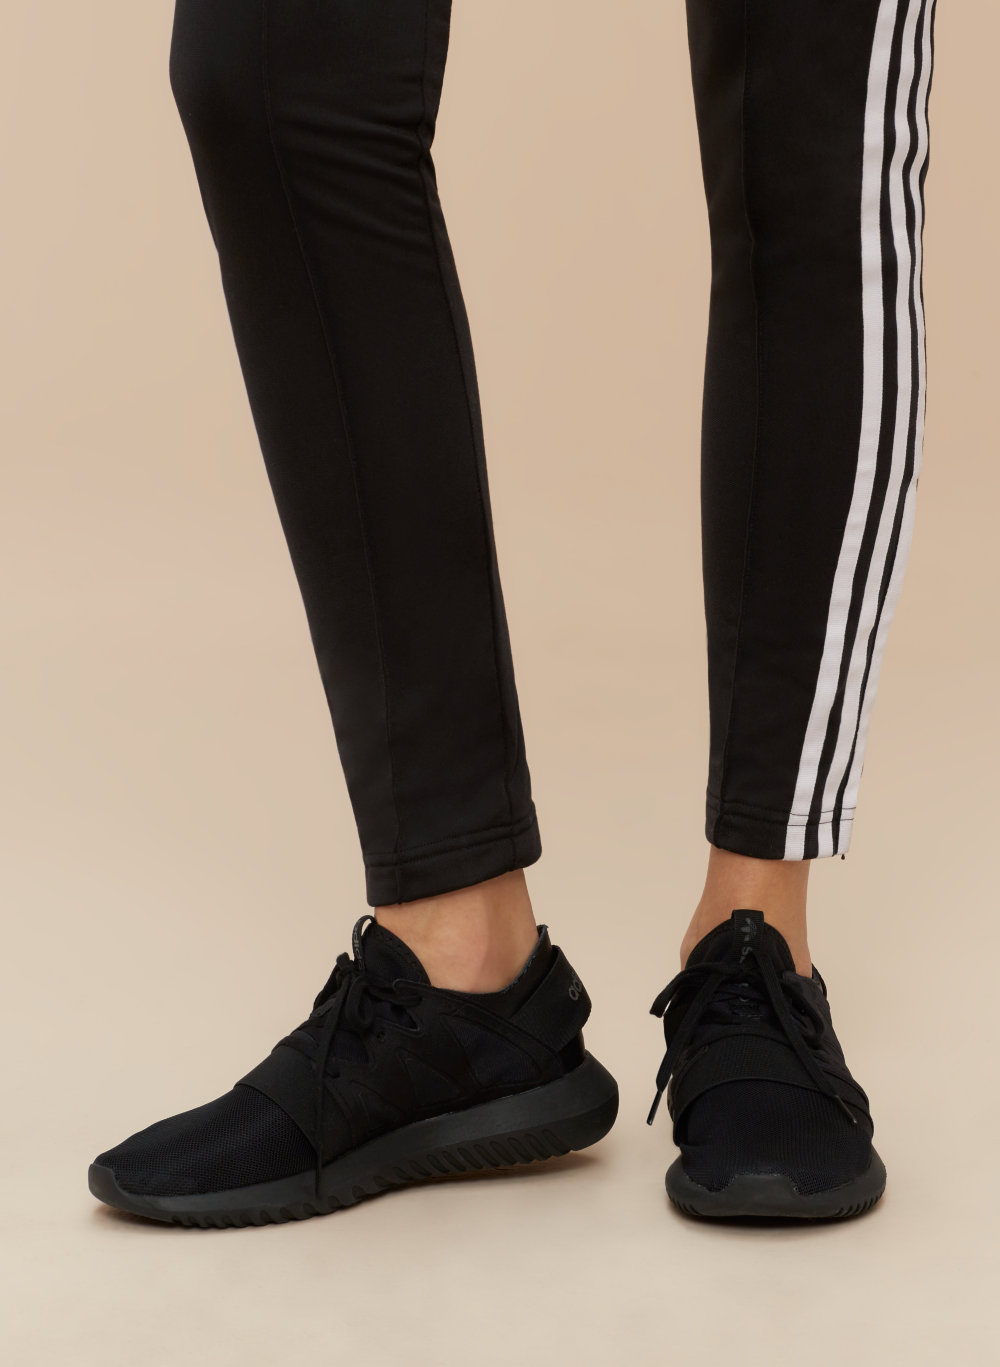 Adidas Women 's Tubular Defiant Sneakers in White Black Akira